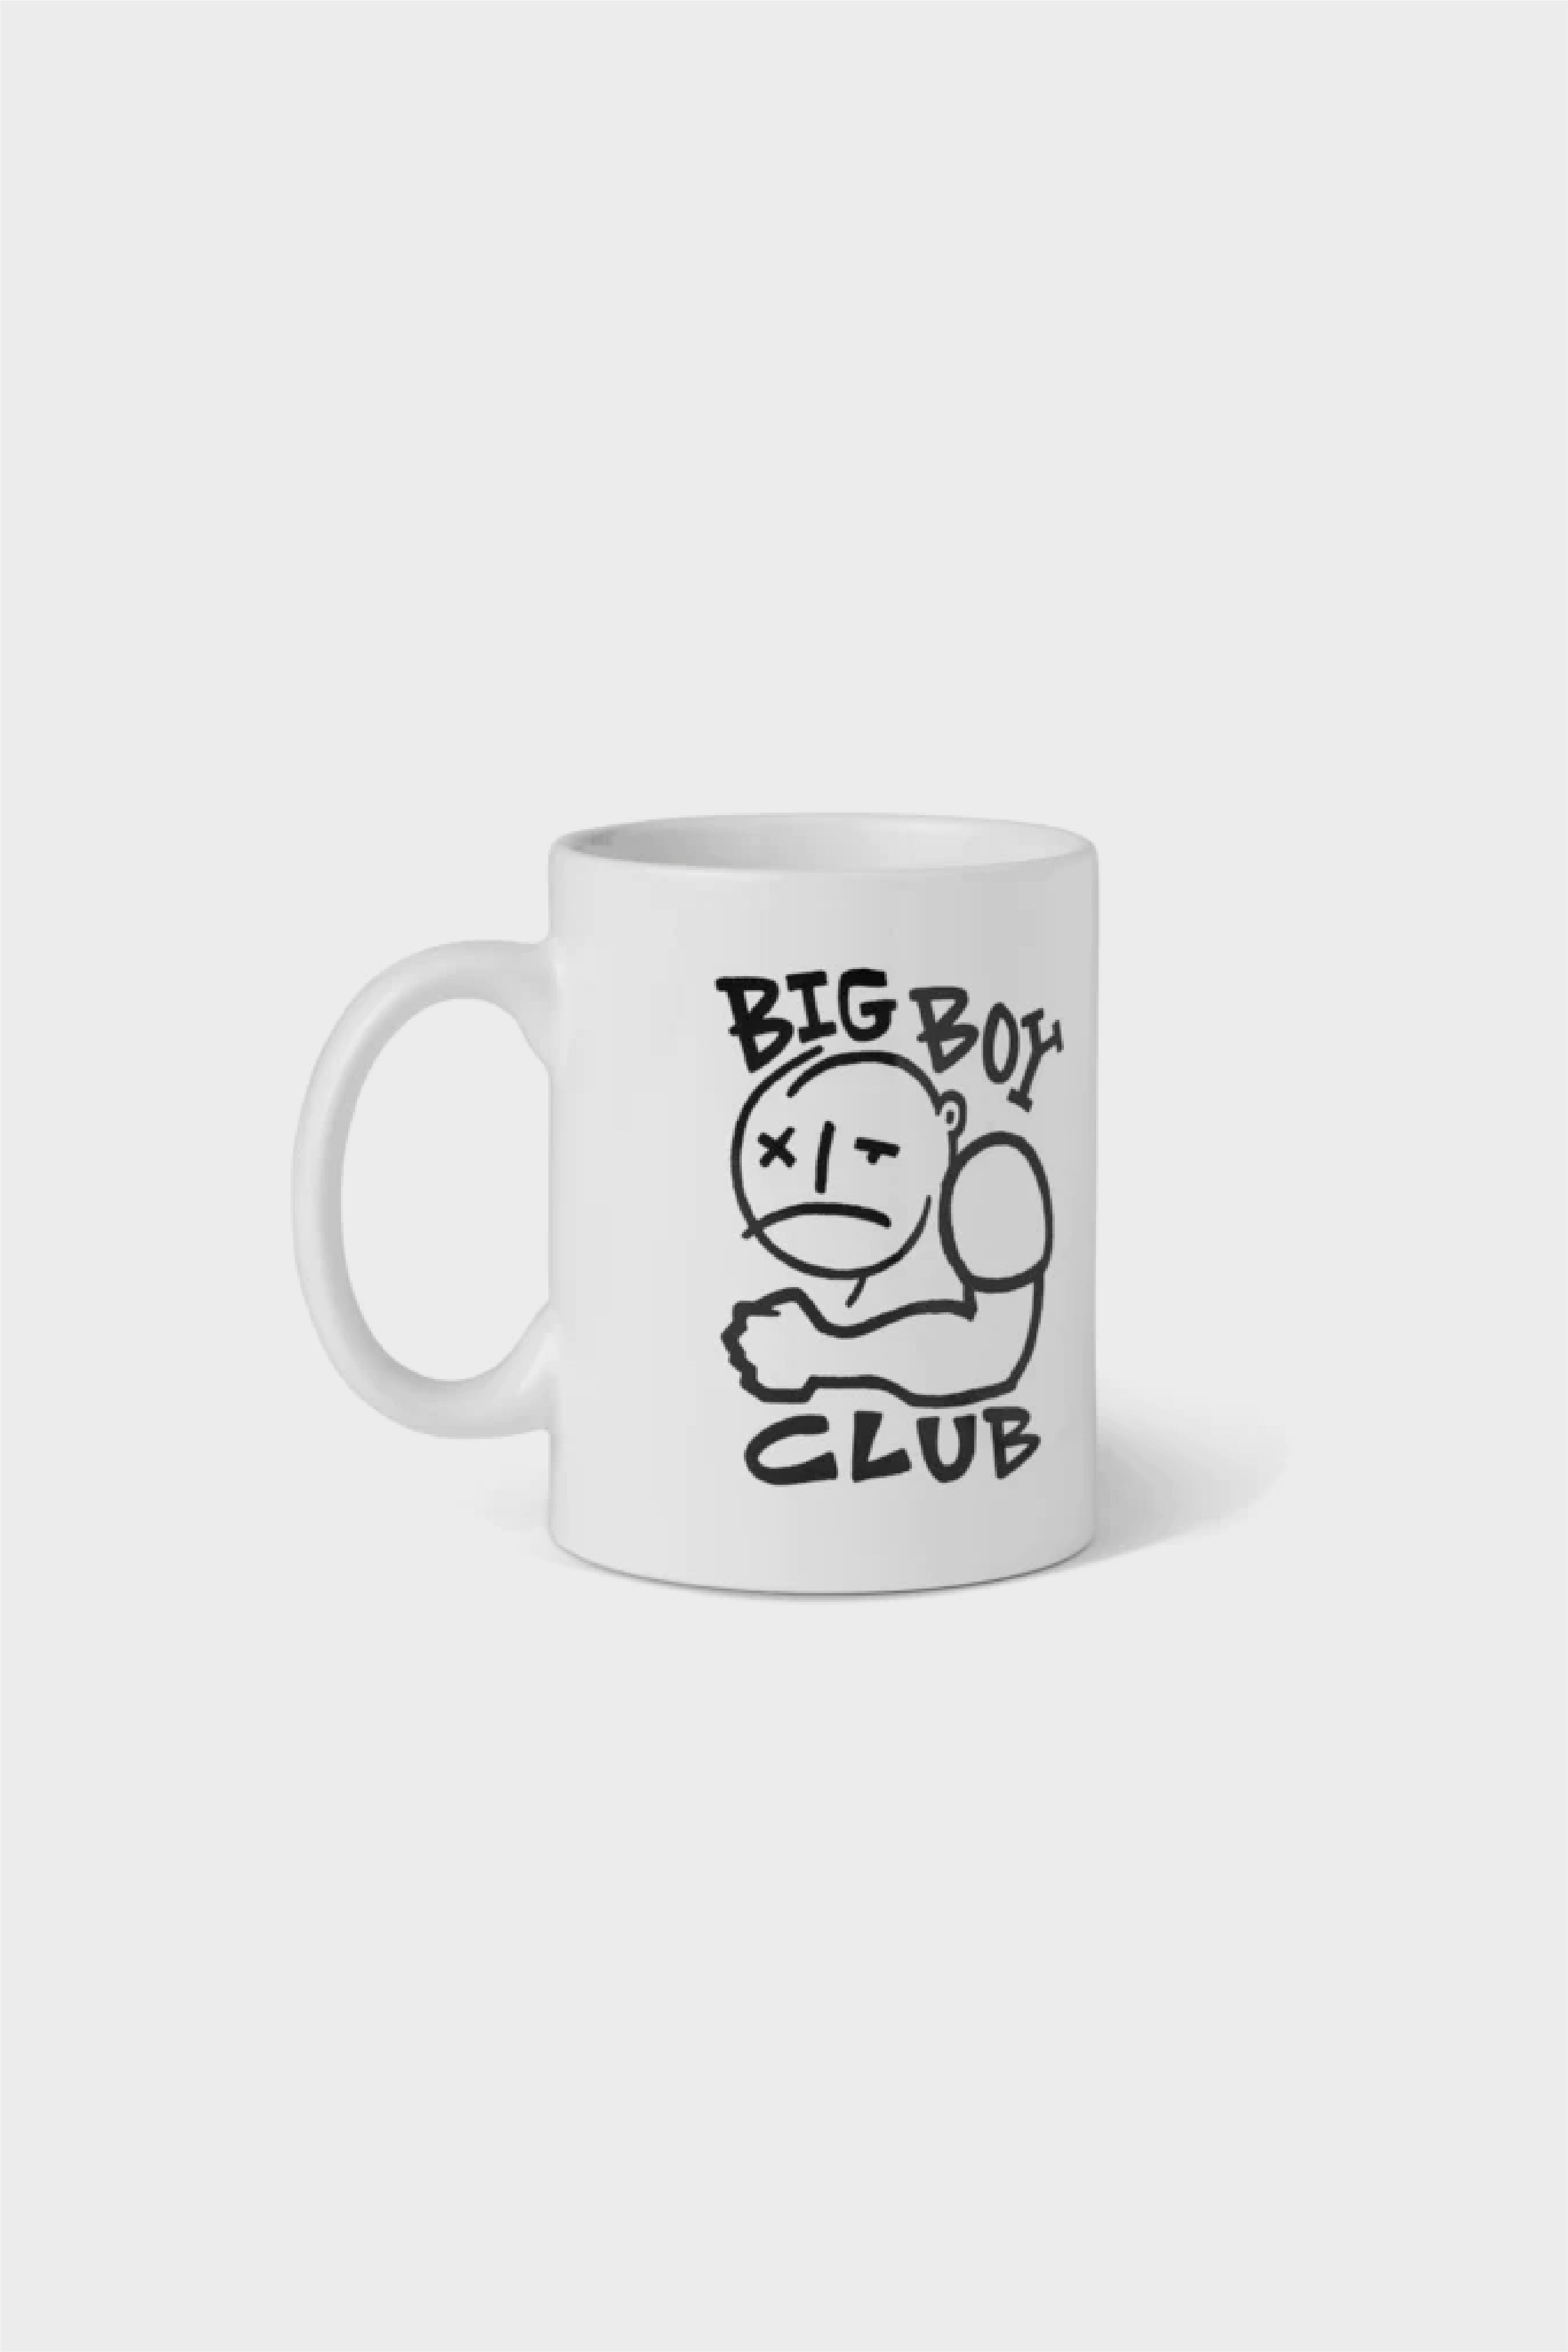 Selectshop FRAME - POLAR SKATE CO. Big Boy Club Mug All-accessories Concept Store Dubai